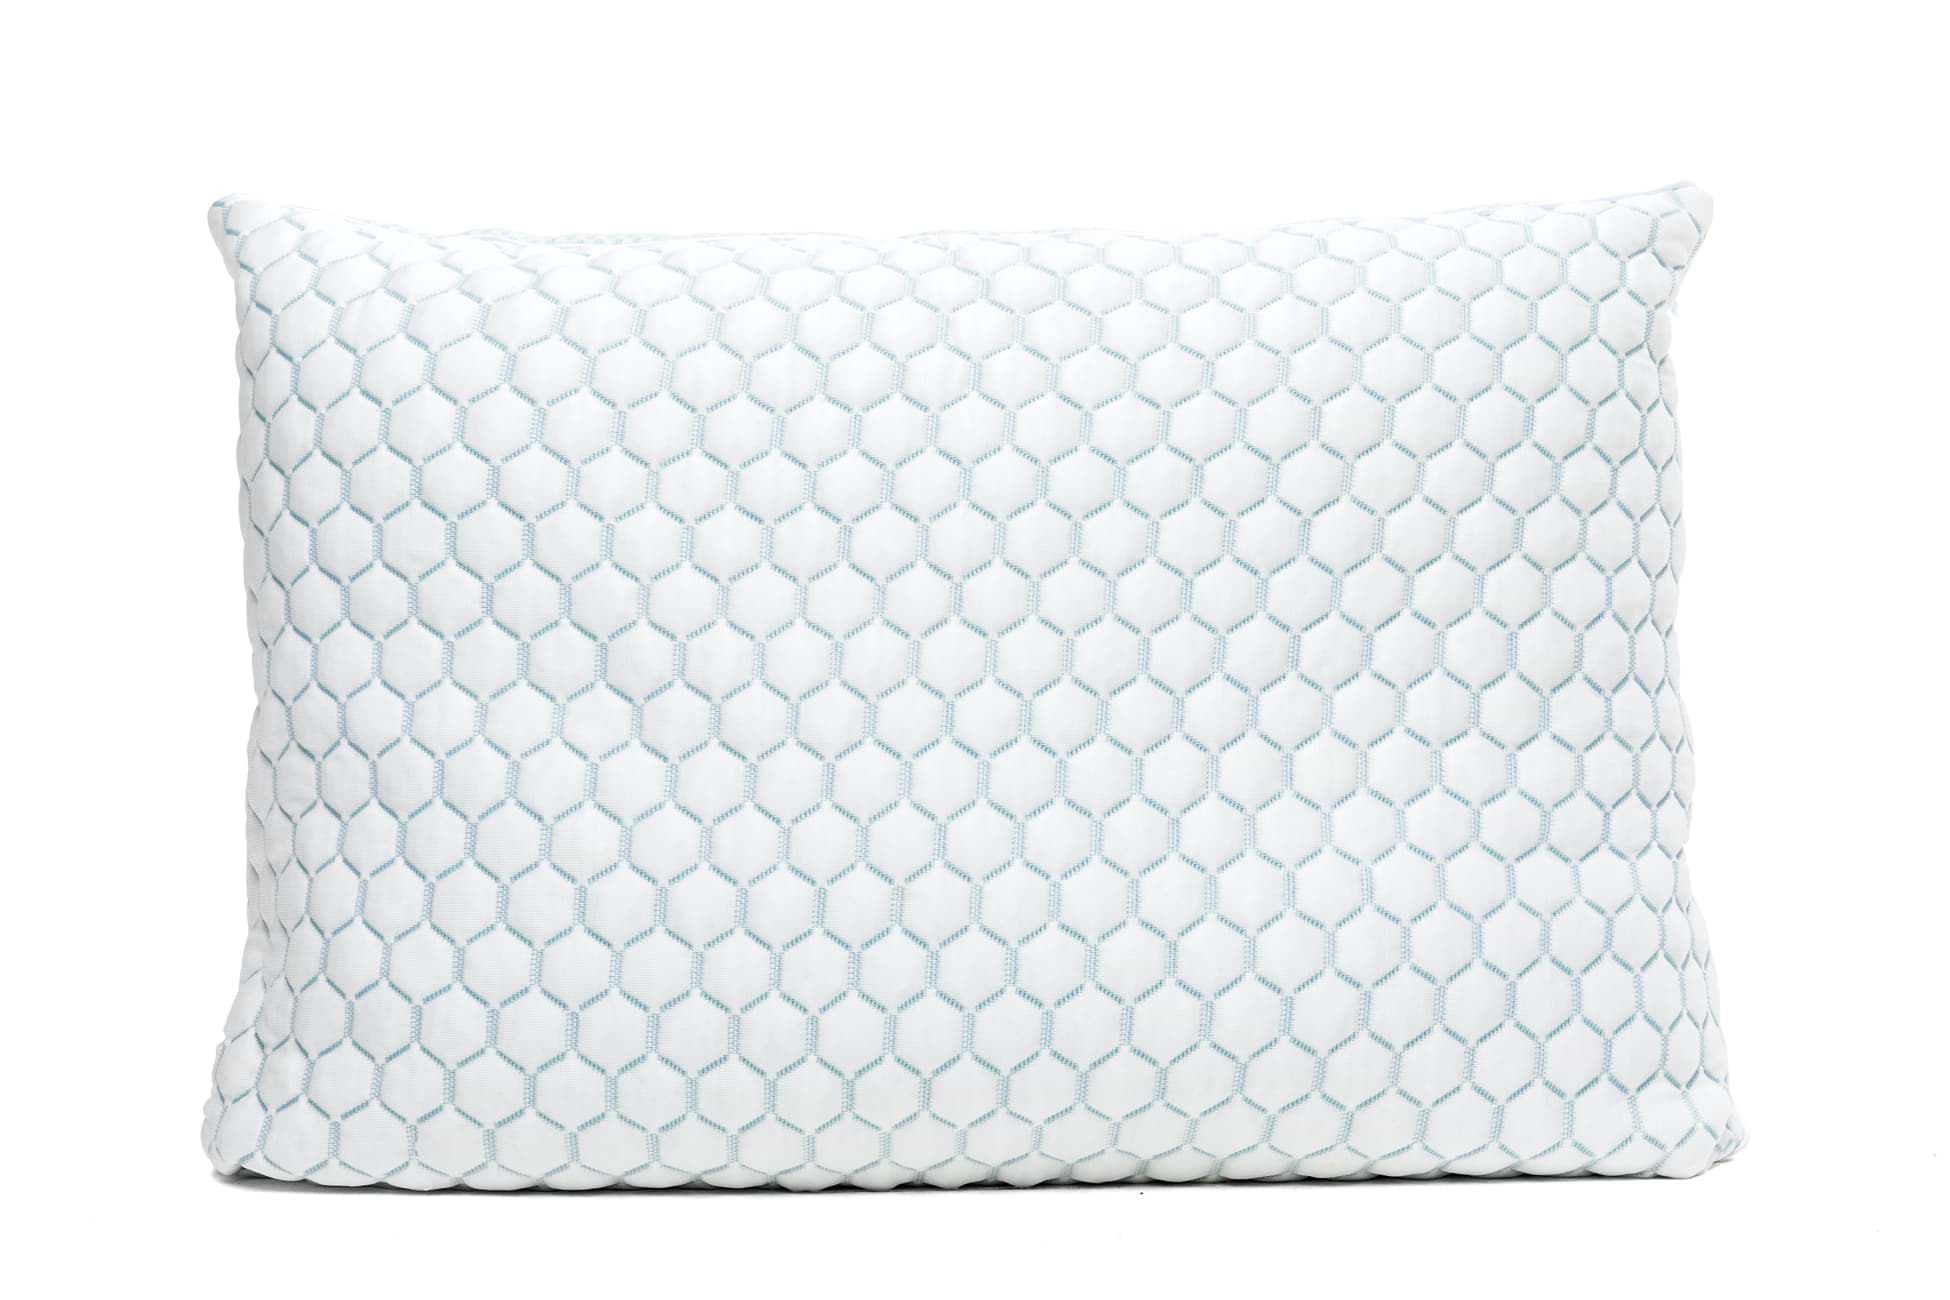 Image of MOLECULET Infinity PRO Adjustable Foam Pillow